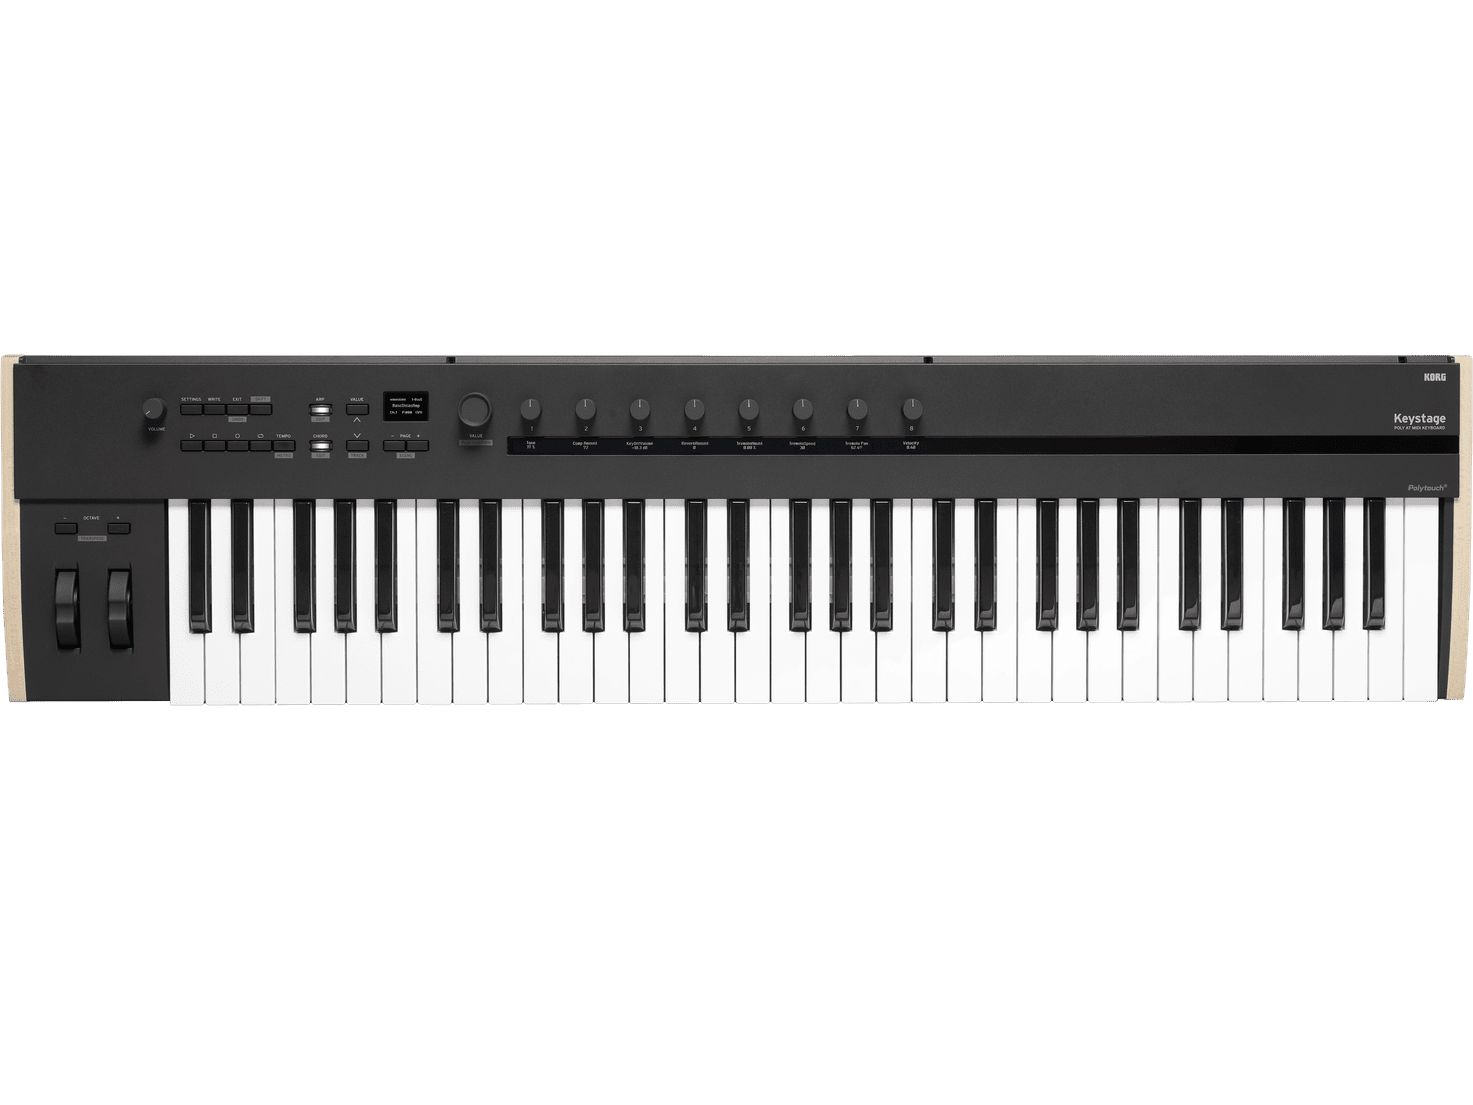 #Keyboard length_61 Keys